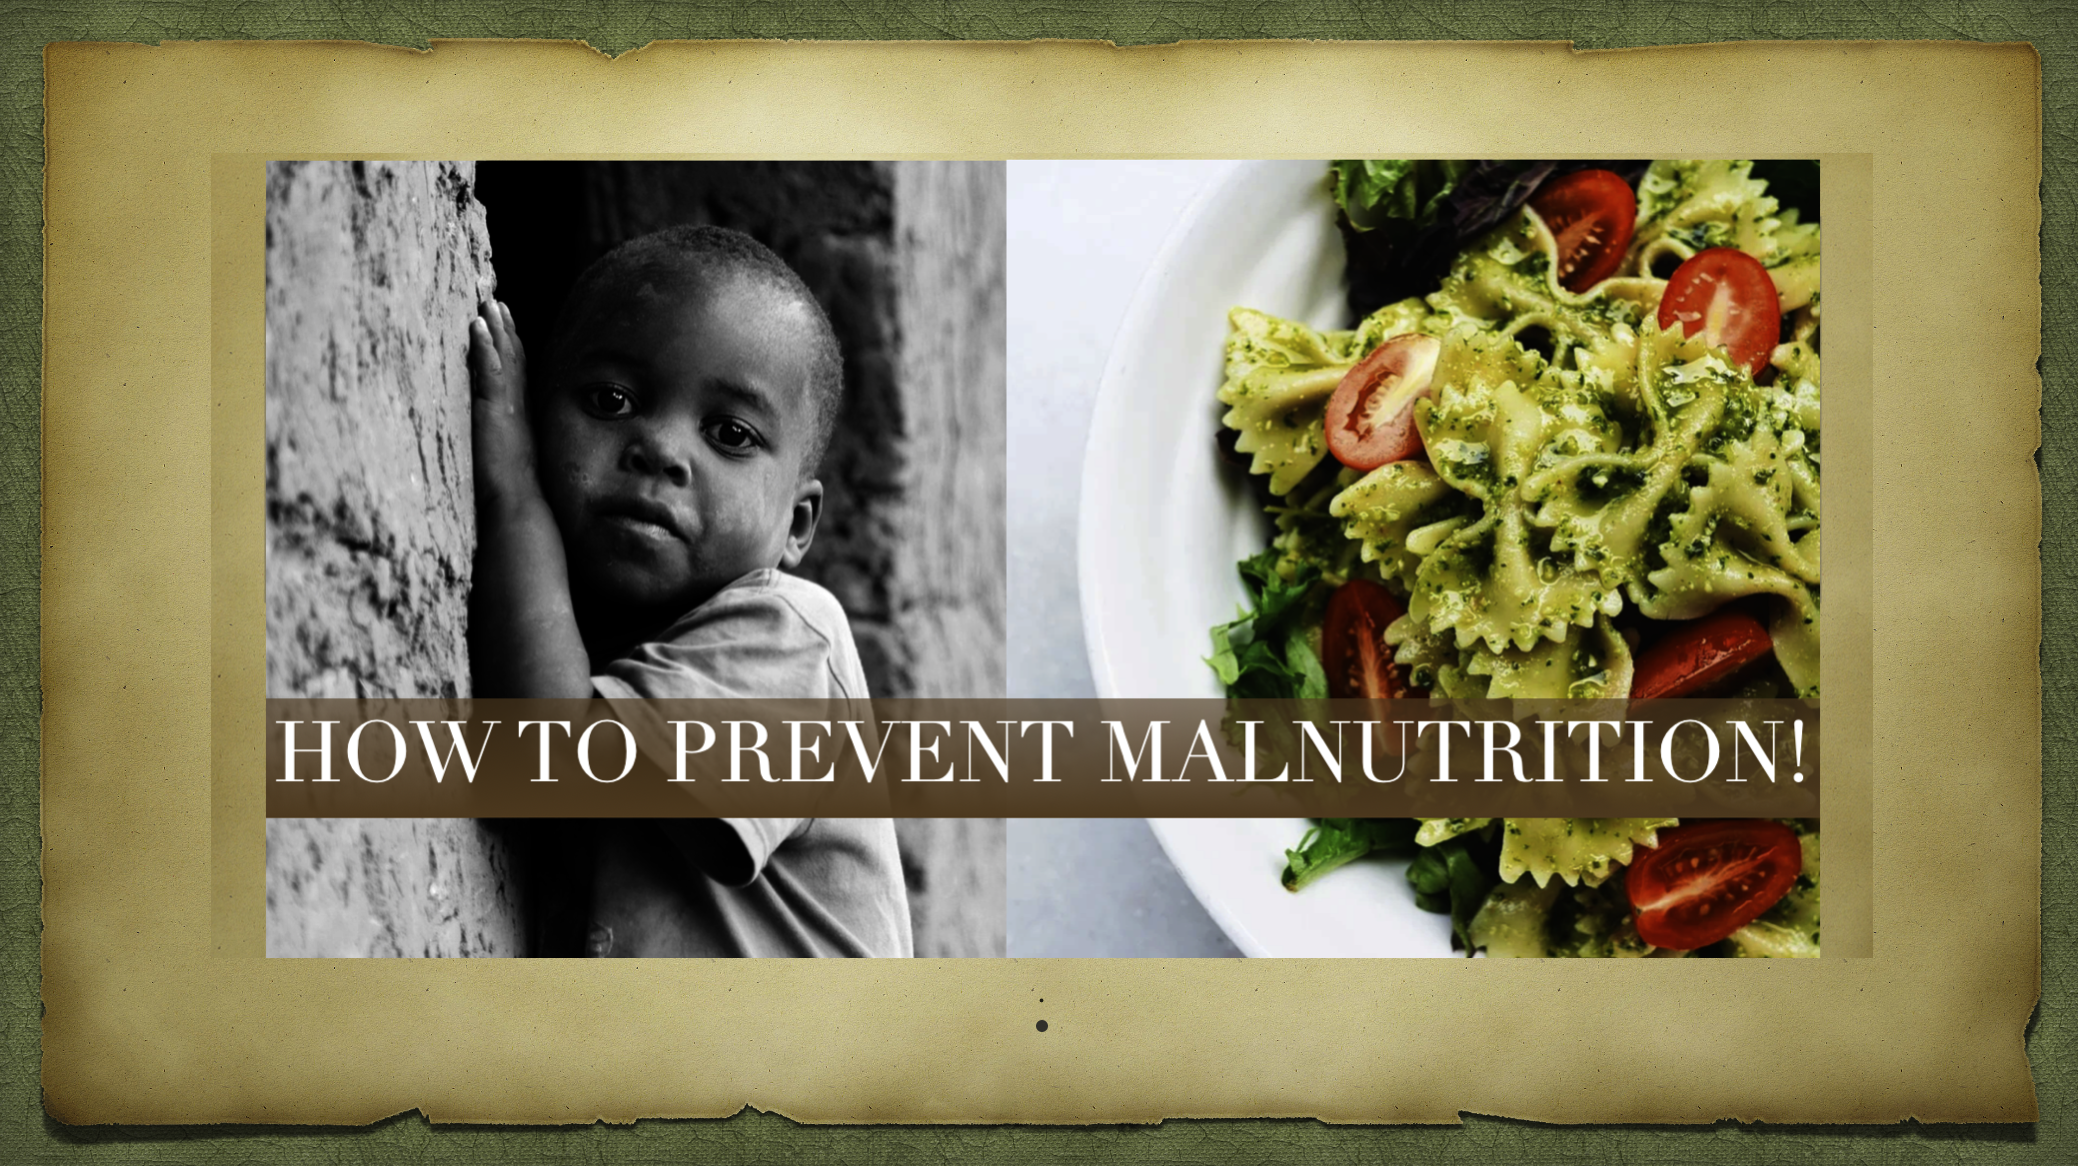 Prevention of malnutrition